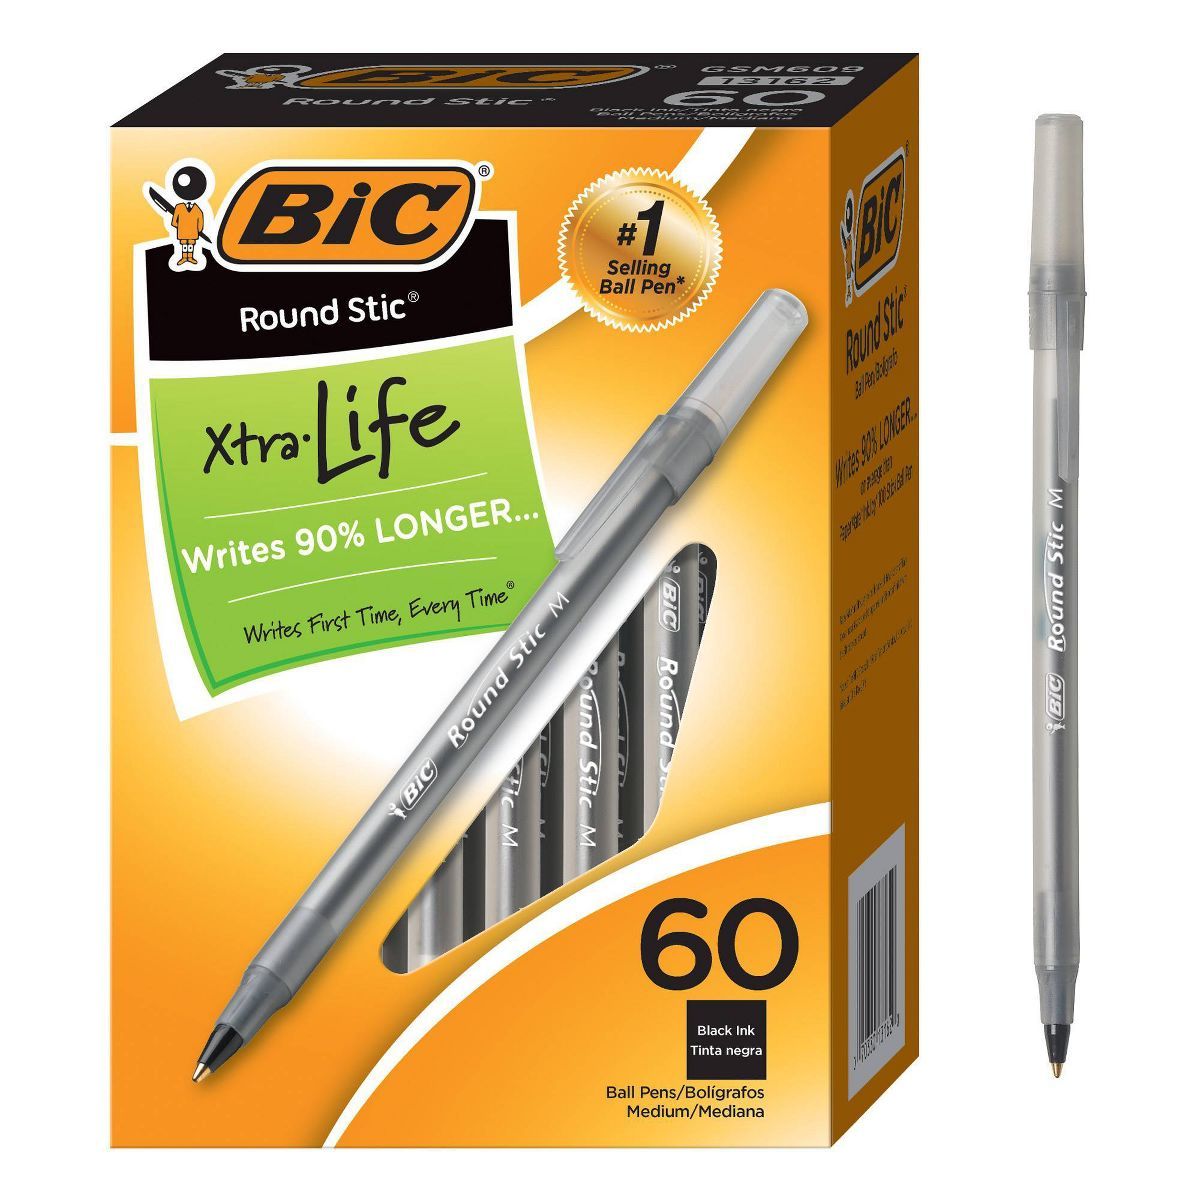 BiC 60pk Ball Pen Stic Refill Black | Target